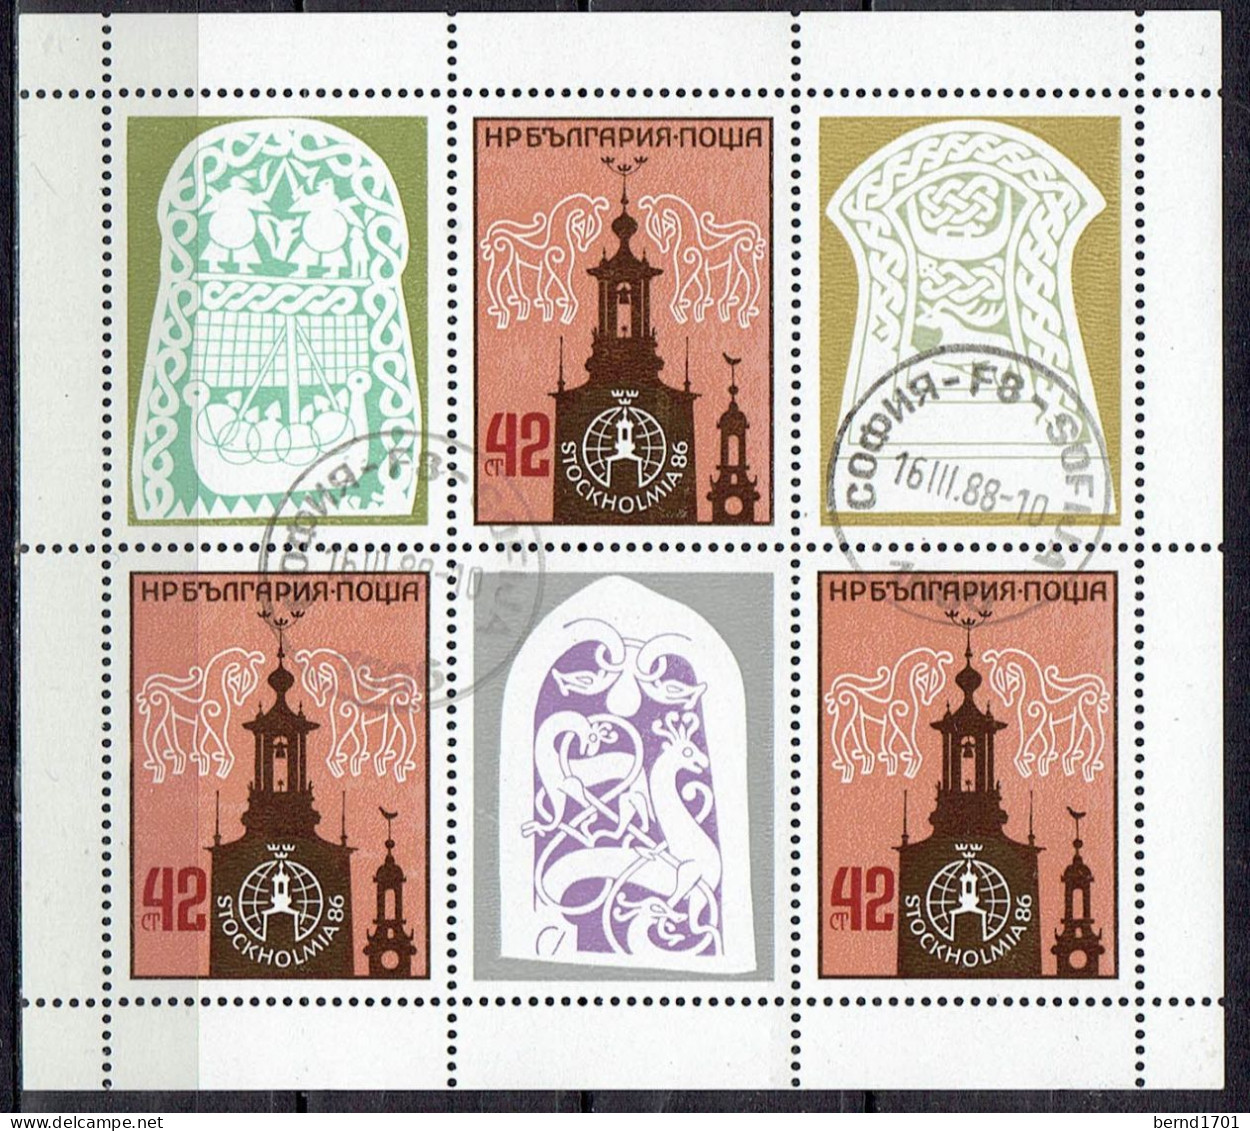 Bulgarien / Bulgaria - Mi-Nr 3492 Klbg Gestempelt / Used (J1326) - Briefmarkenausstellungen